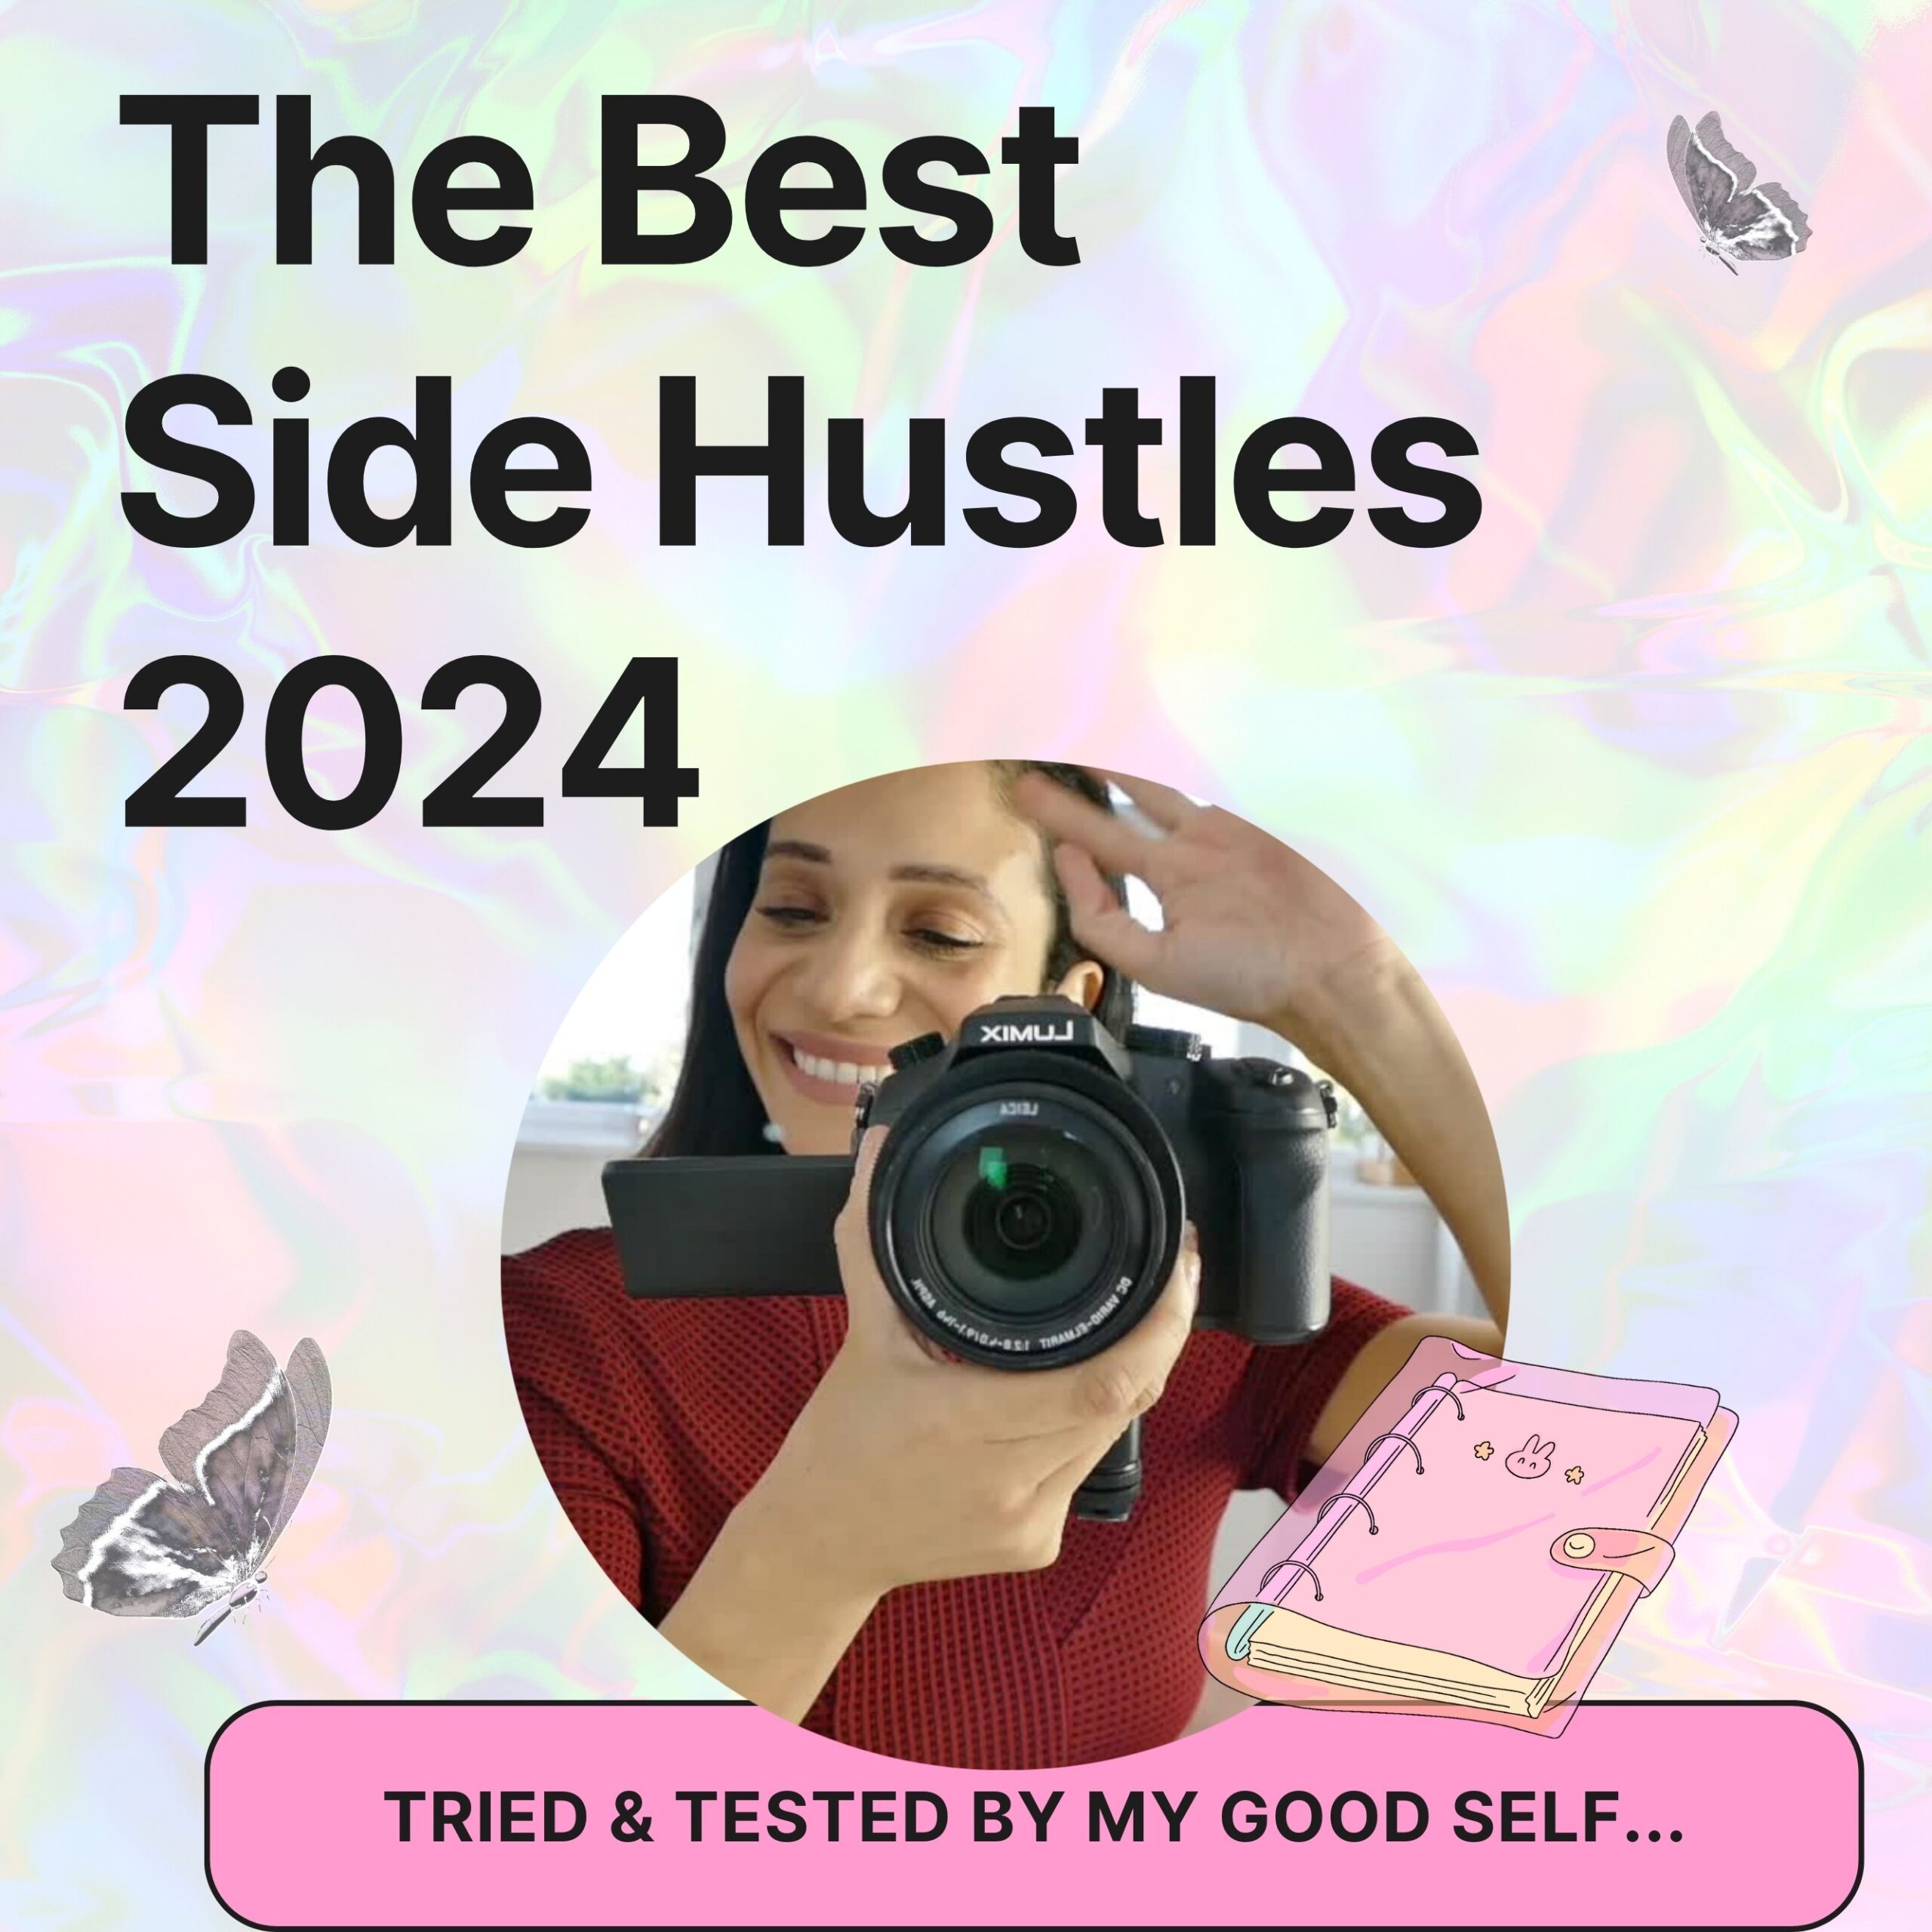 The Best Side Hustles of 2024